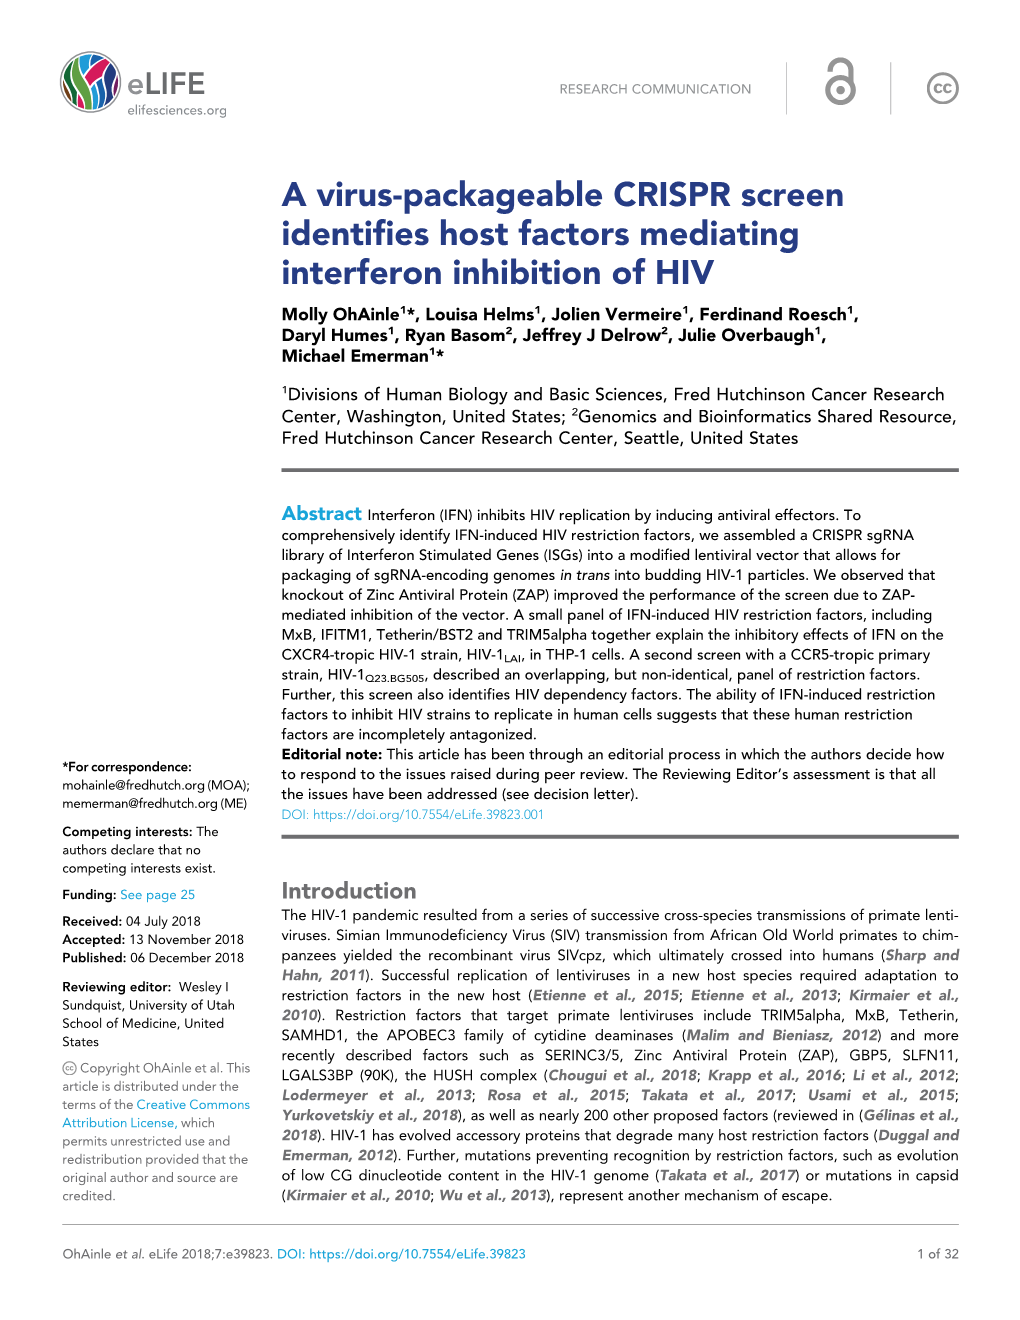 A Virus-Packageable CRISPR Screen Identifies Host Factors Mediating